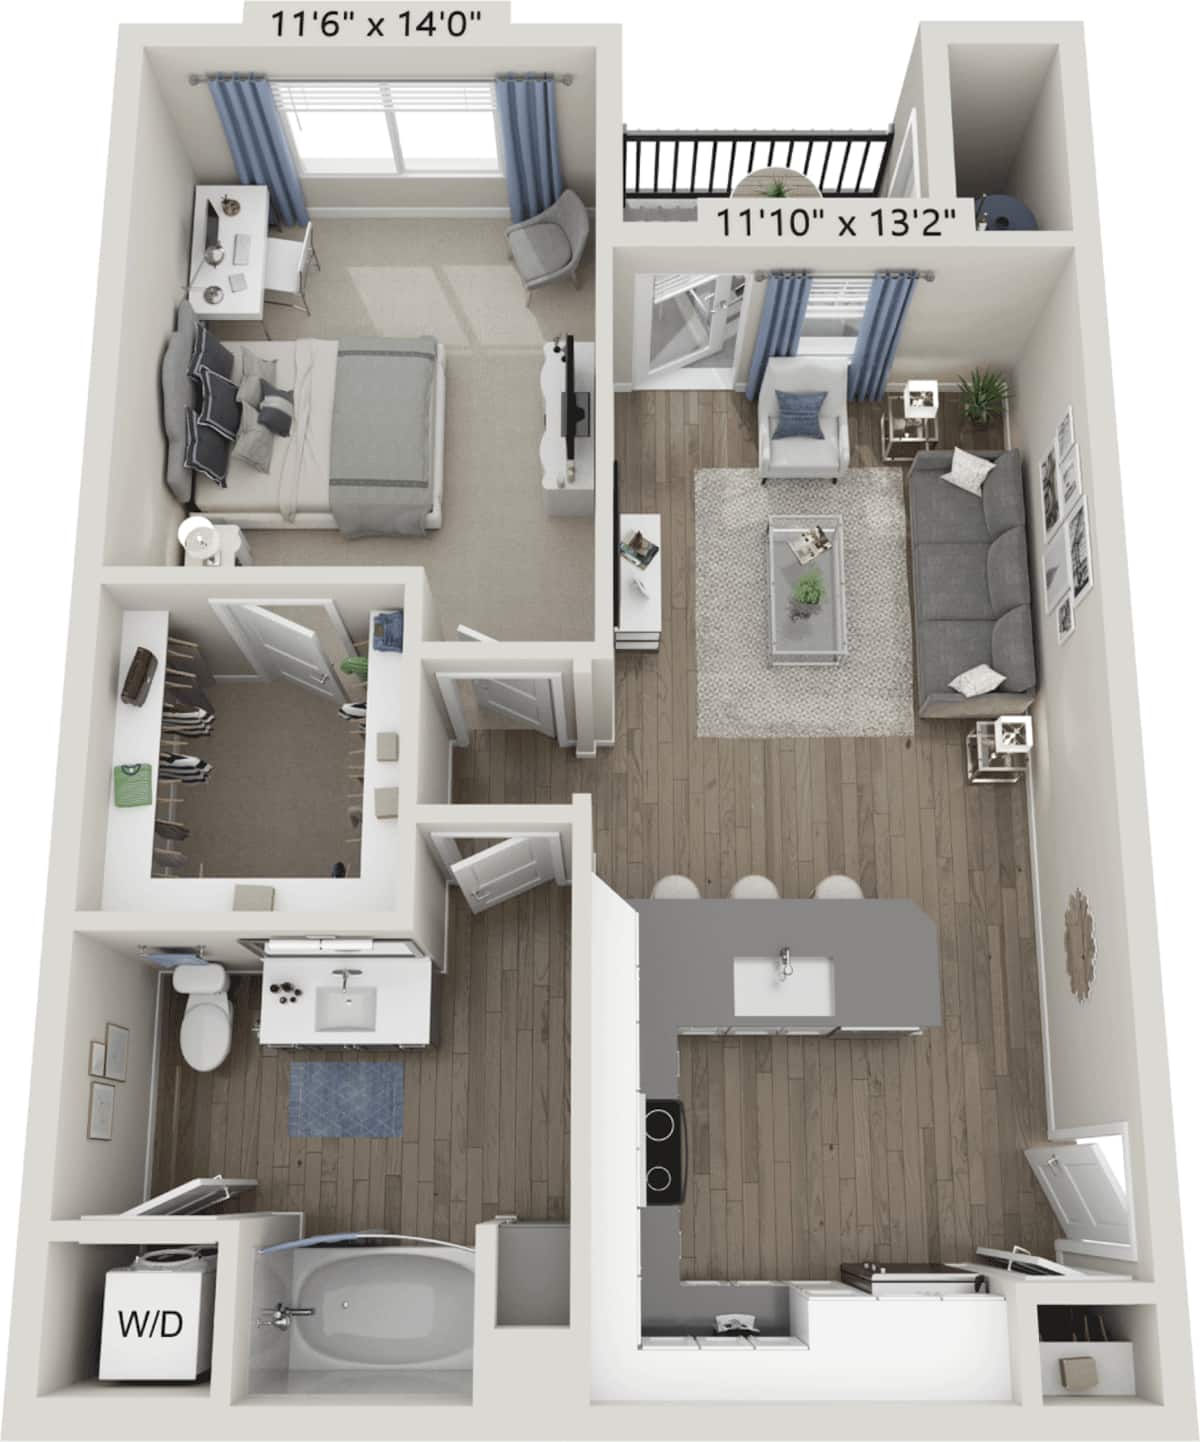 Floorplan diagram for A3 Dawn, showing 1 bedroom